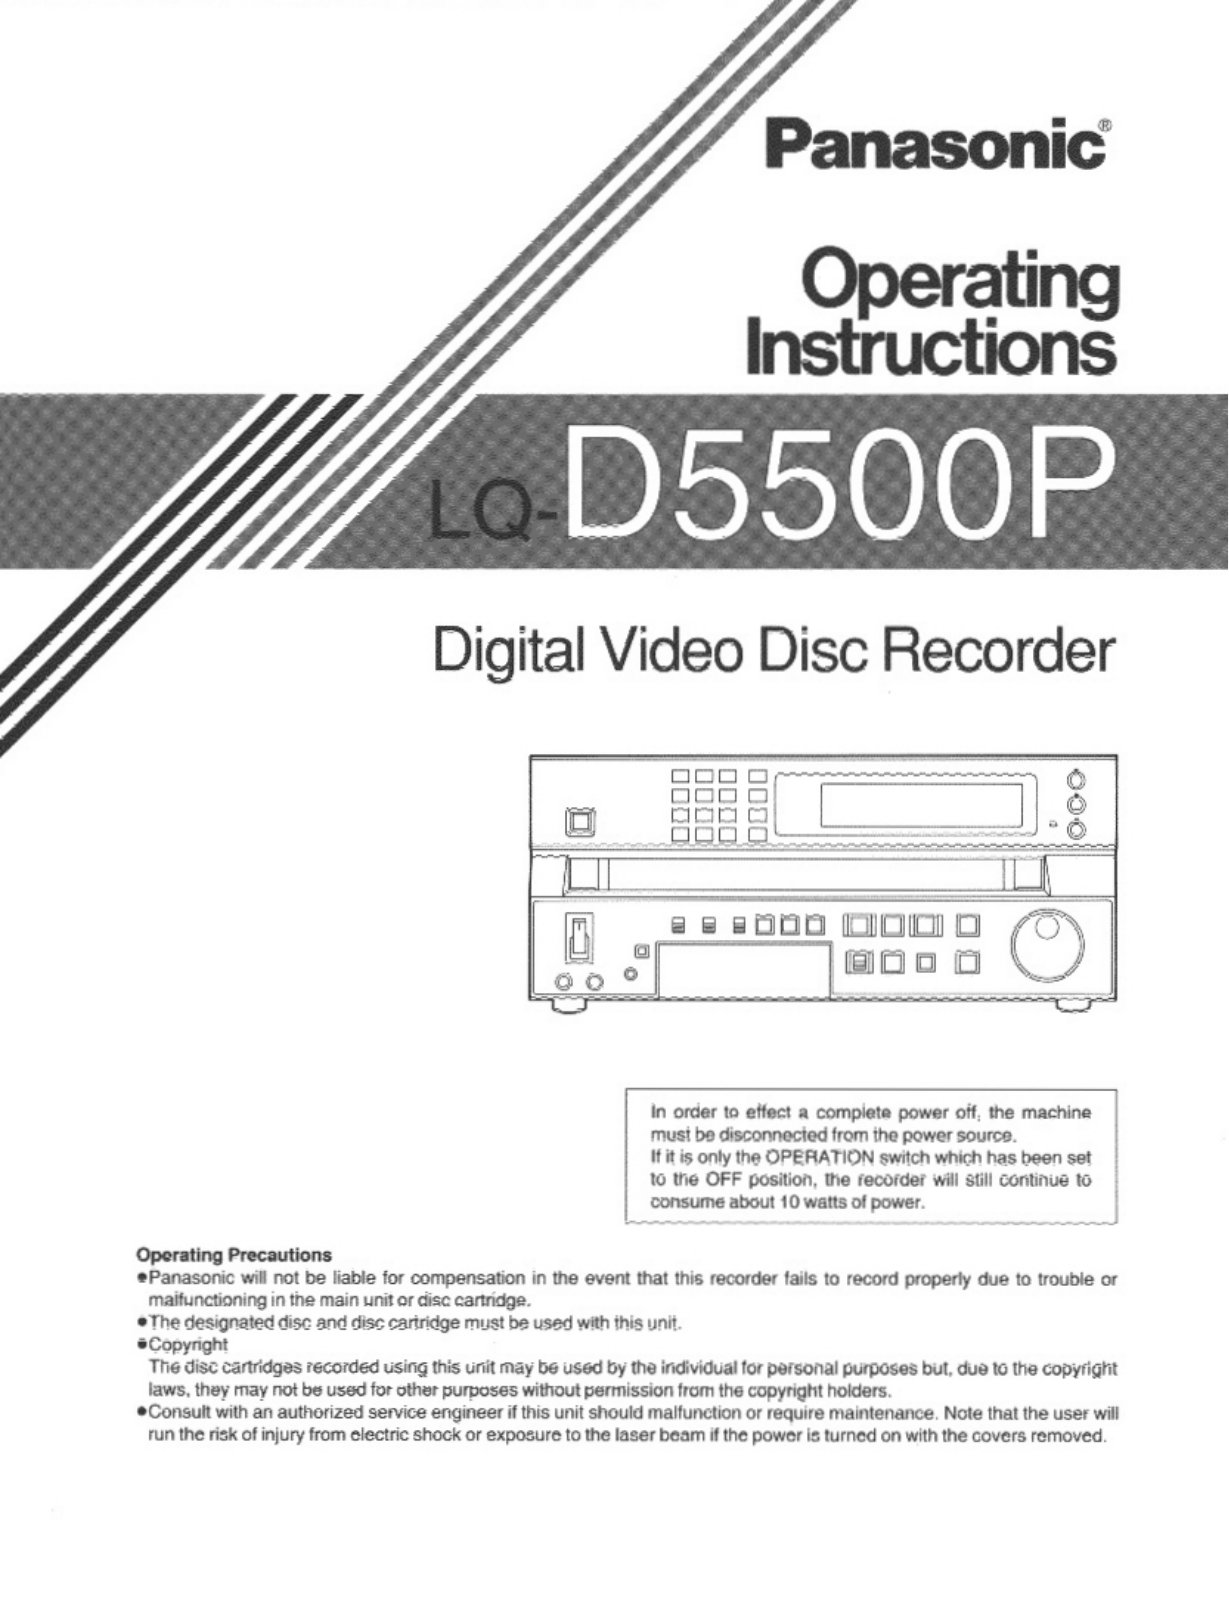 Panasonic lq-d550p Operation Manual